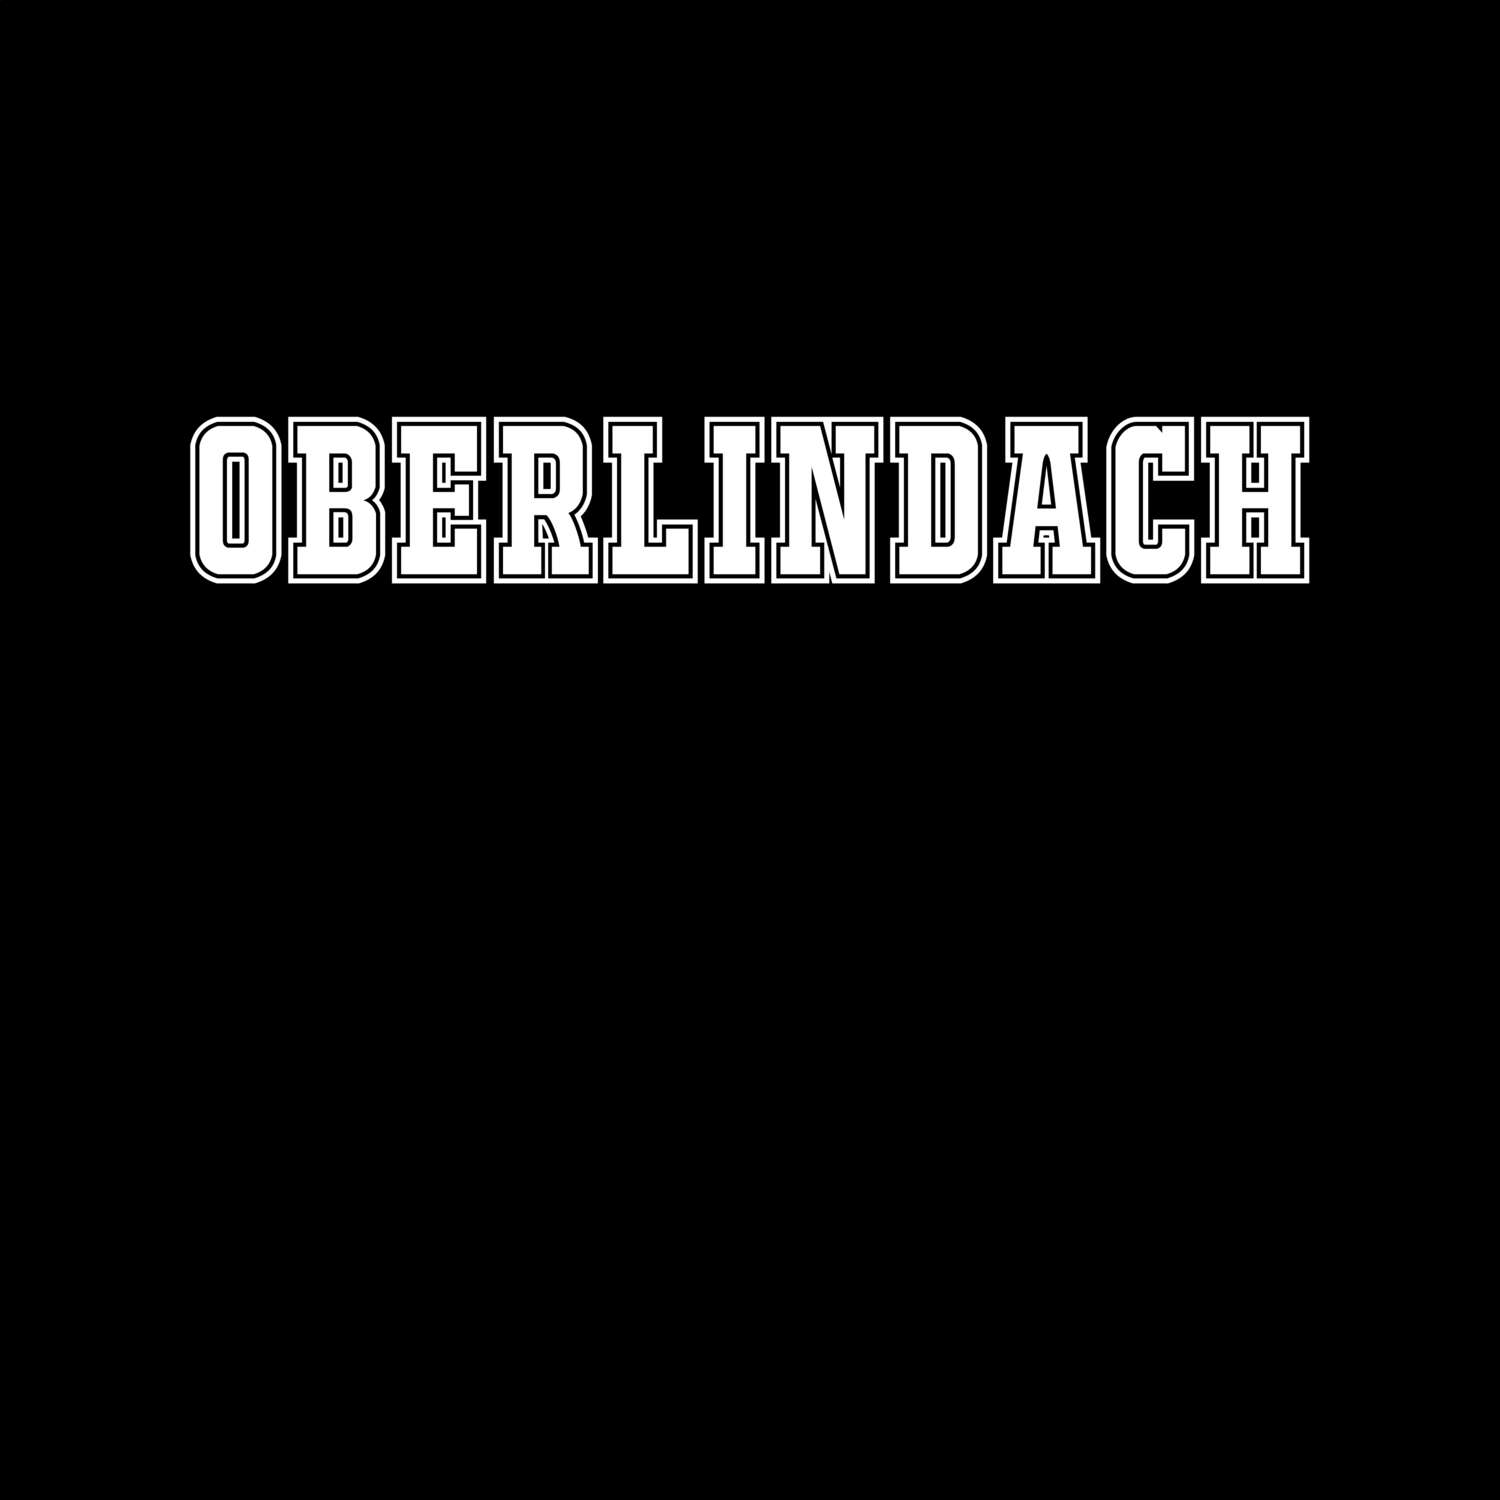 Oberlindach T-Shirt »Classic«